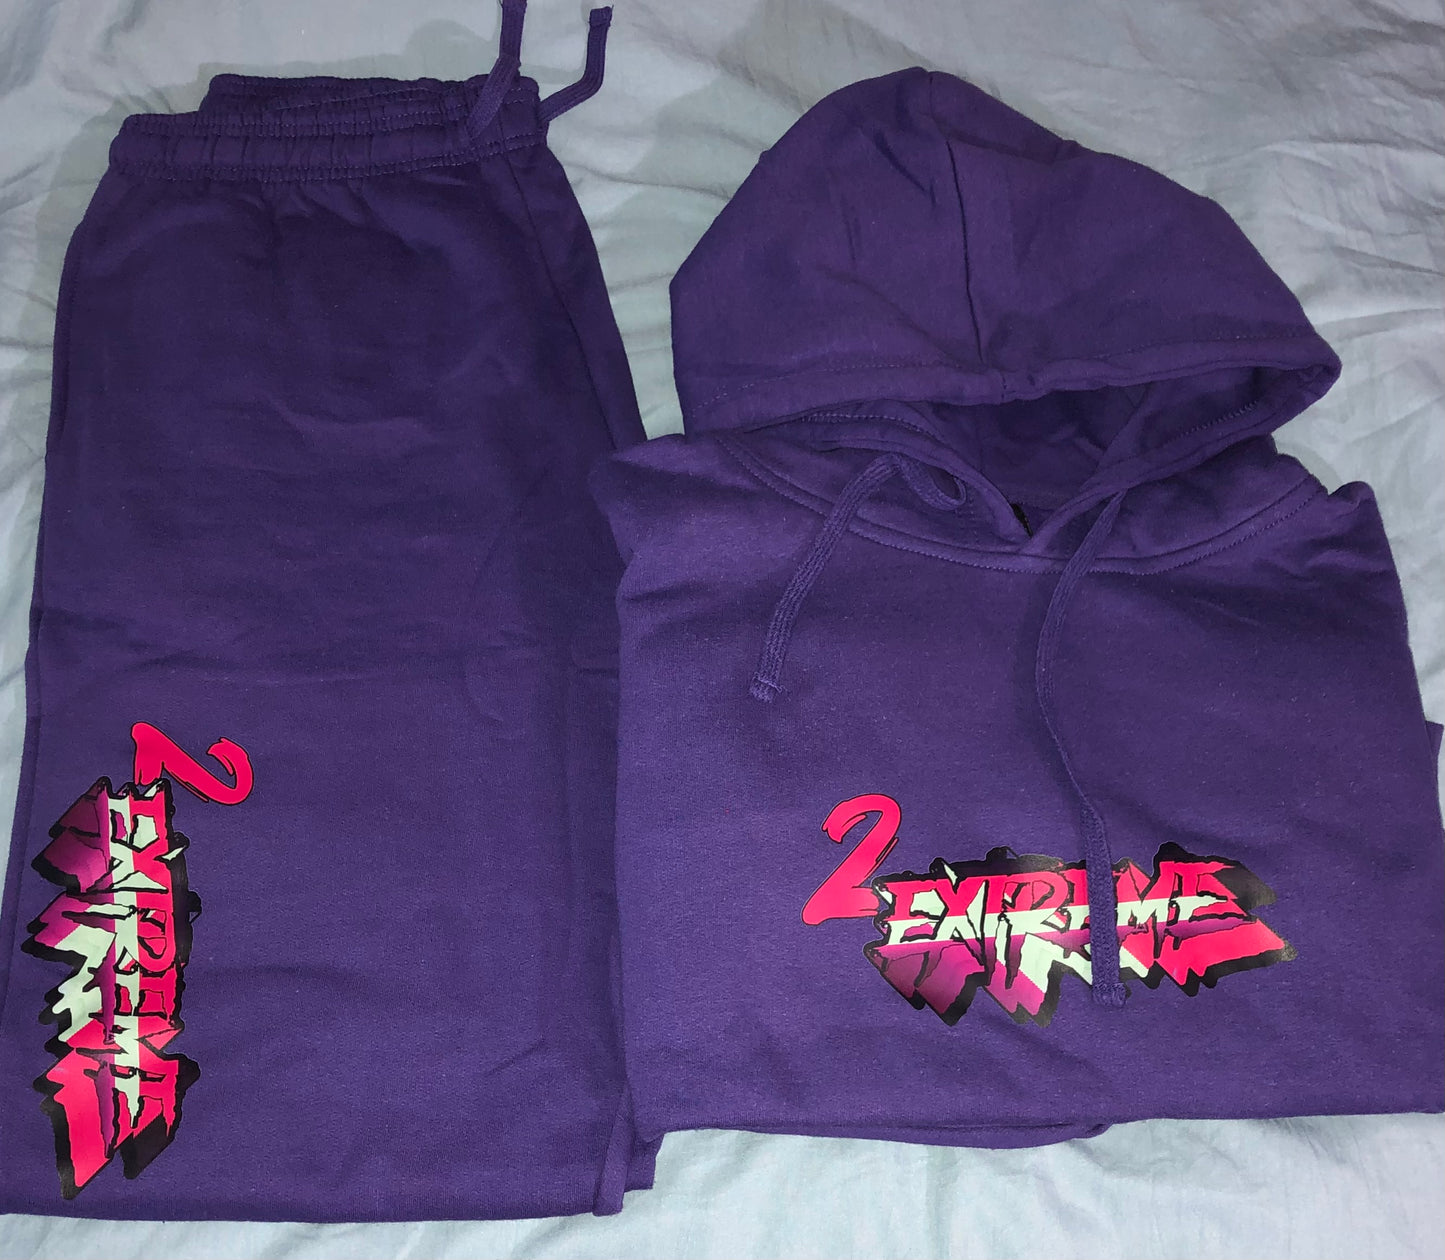 2EXTREME-Purple Sweat Suit